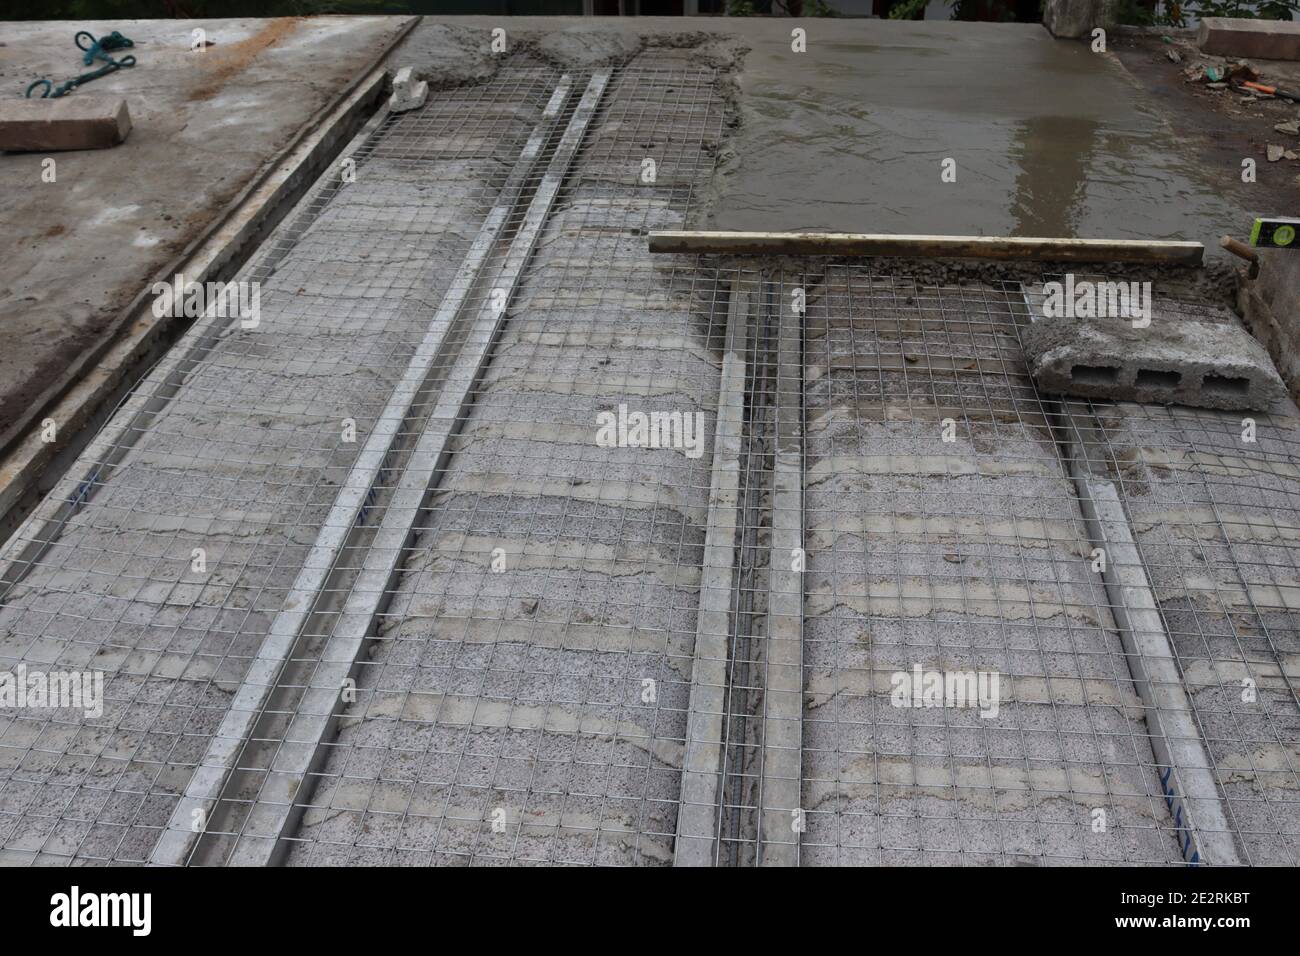 Sbs Suspended Beam Slab Prestressed Concrete Slab System Stock Photo Alamy